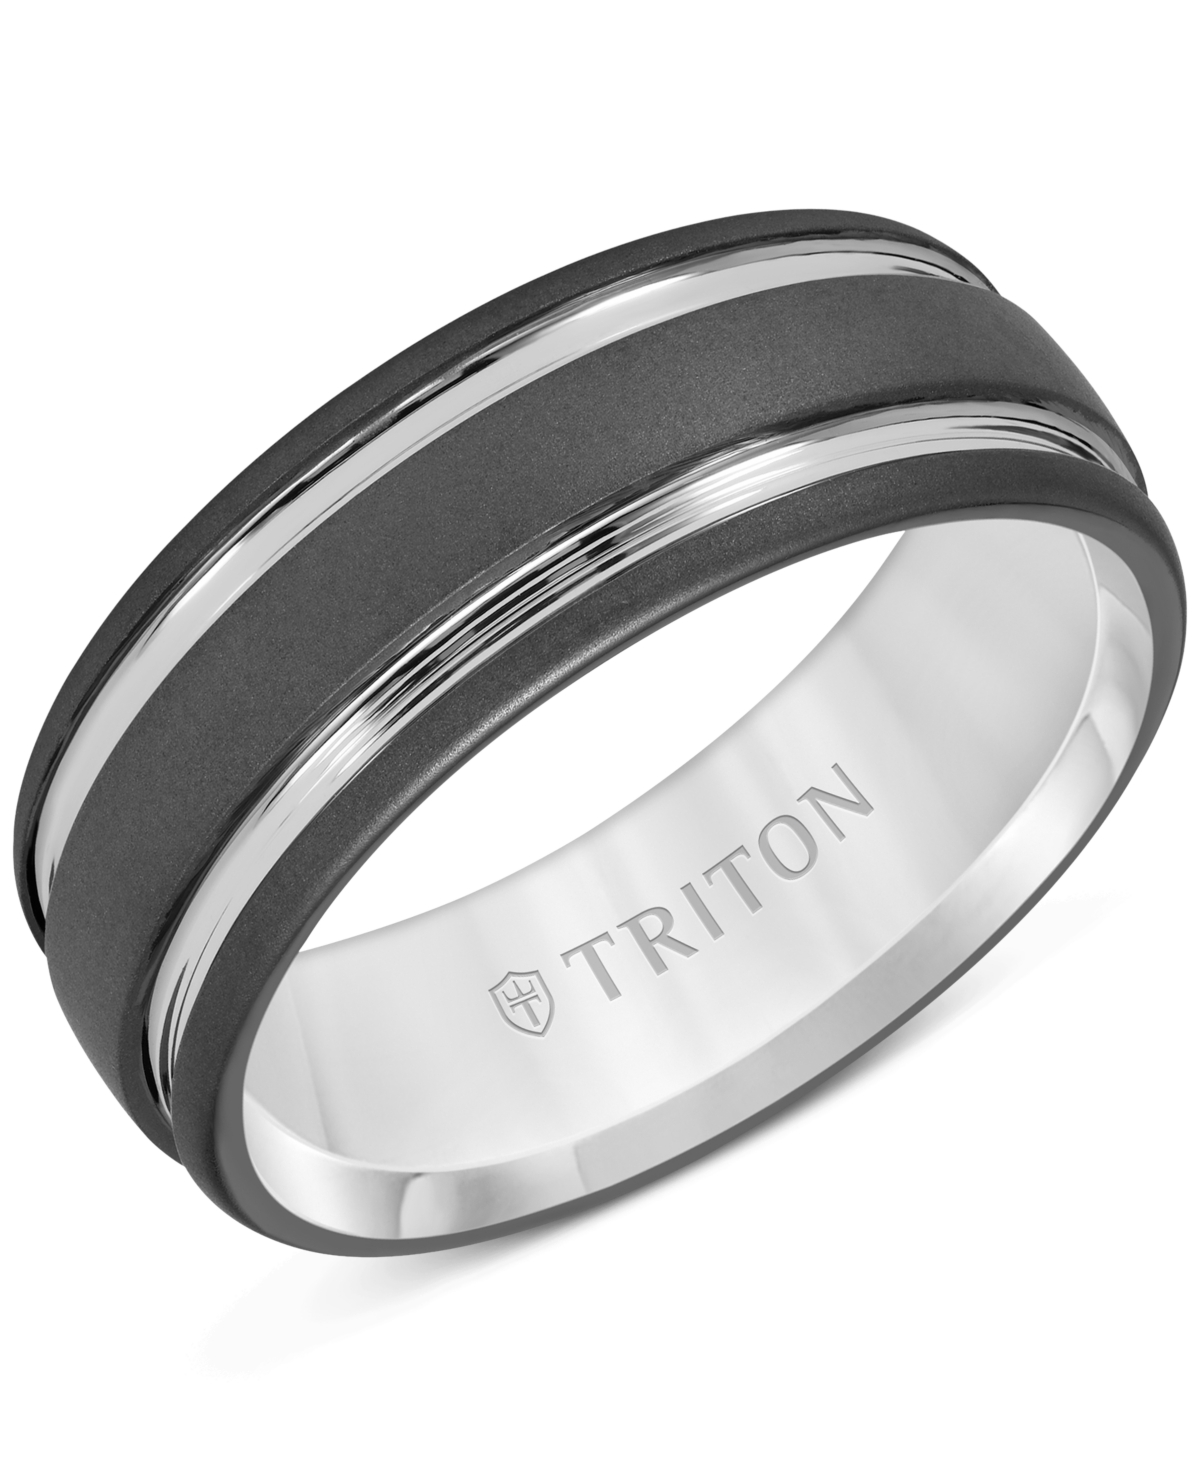 Triton Men's Two-tone Sandblast Finish Wedding Band In Black Tungsten Carbide